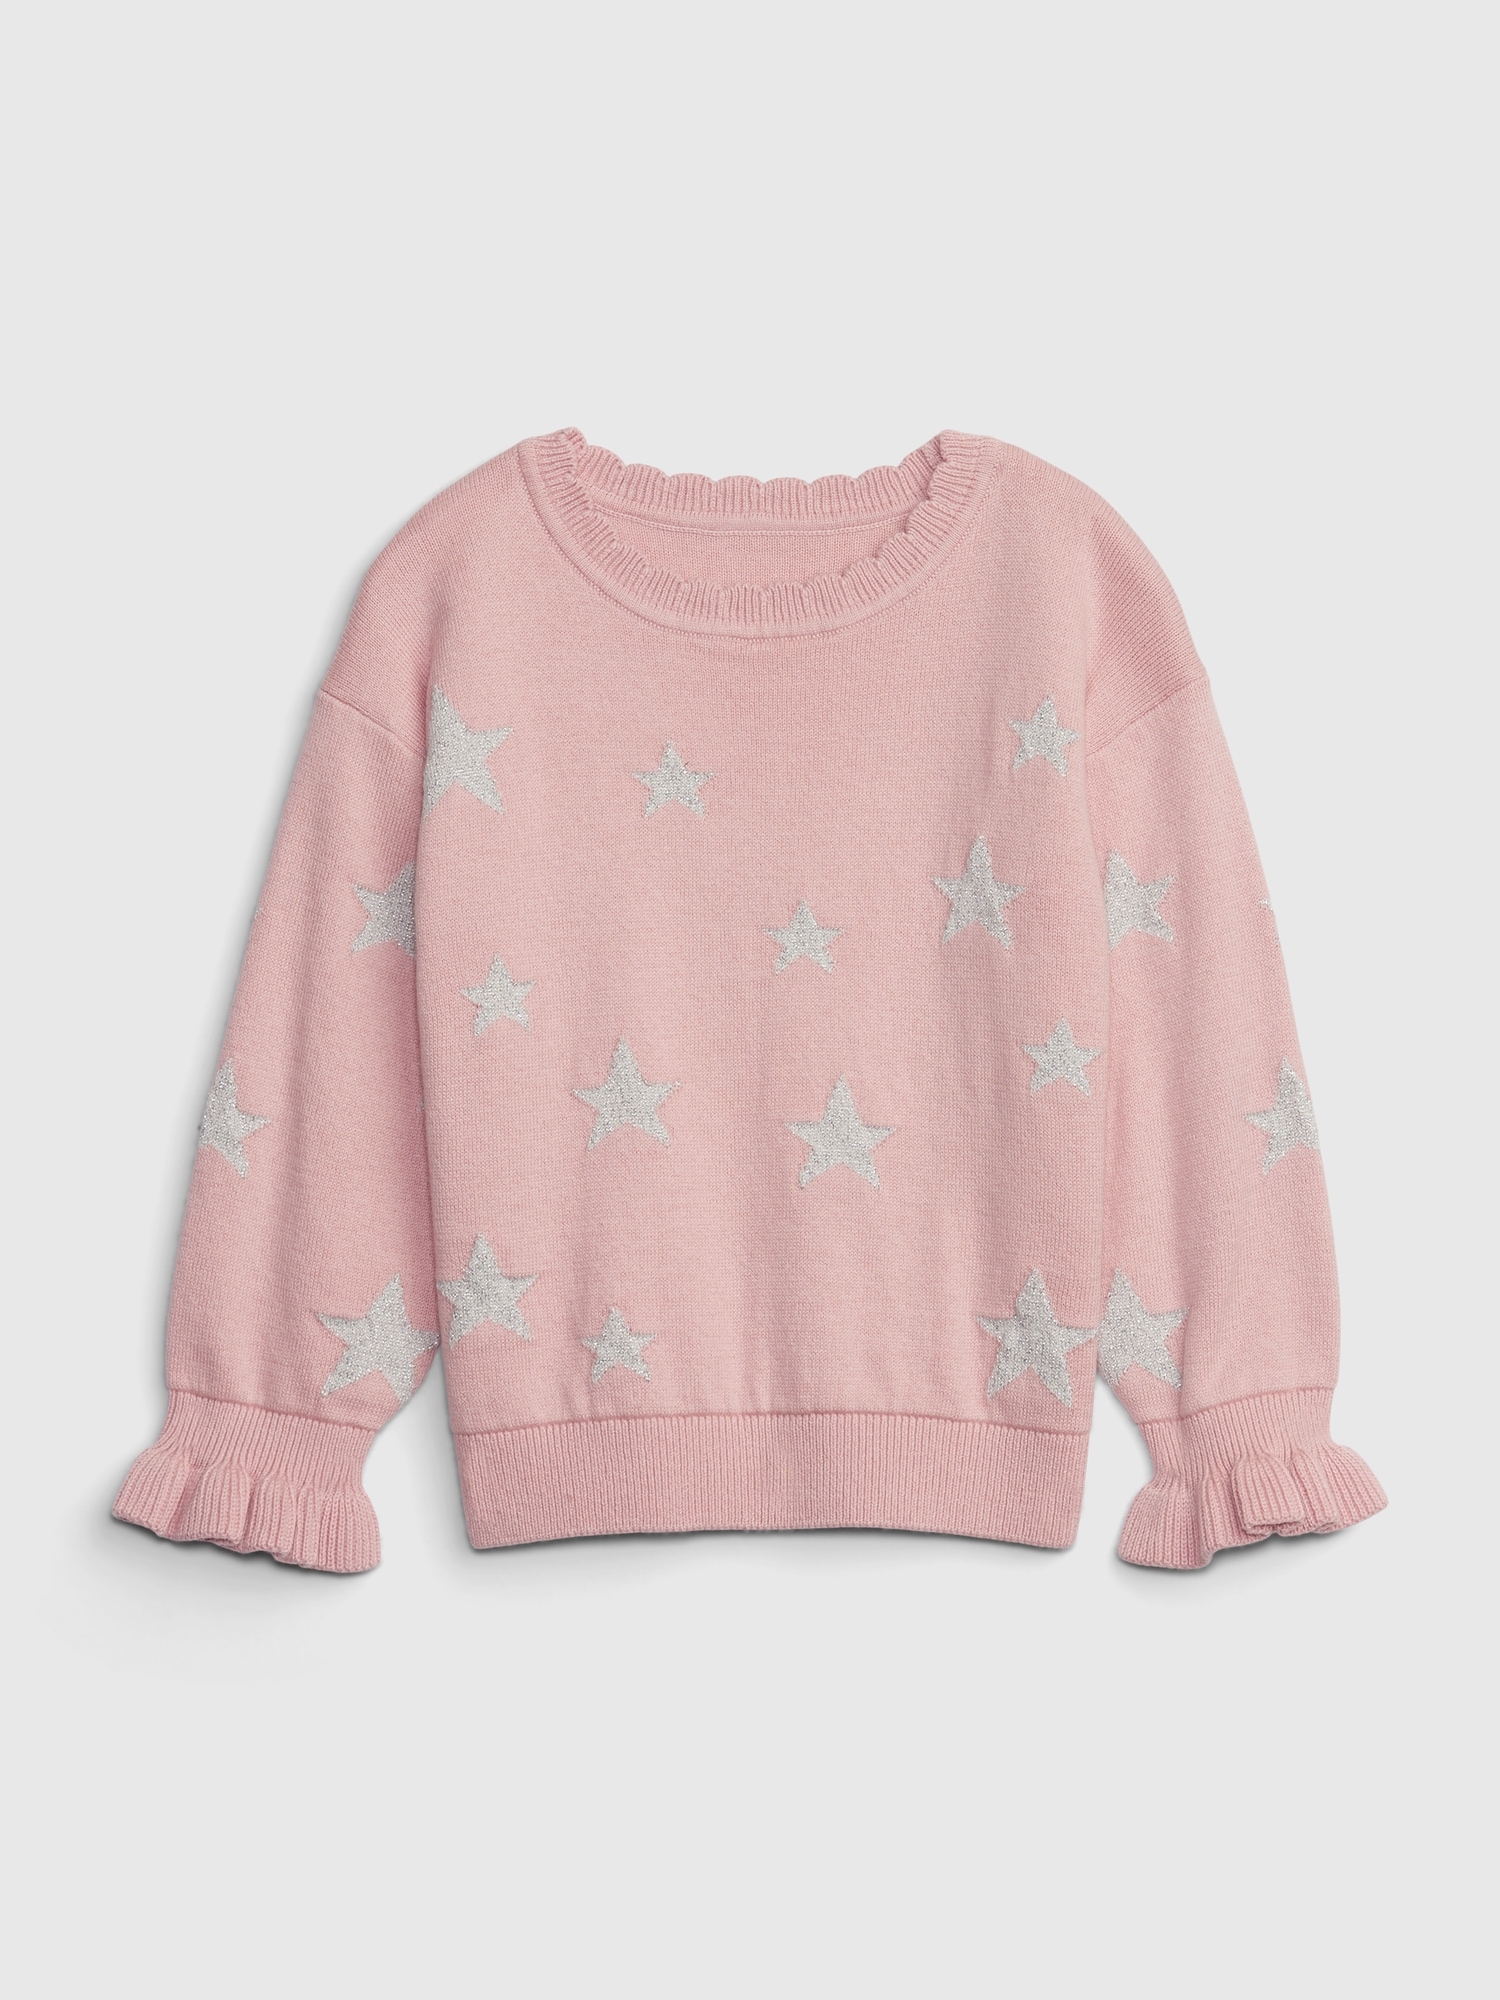 Gap Toddler Ruffle Sweater